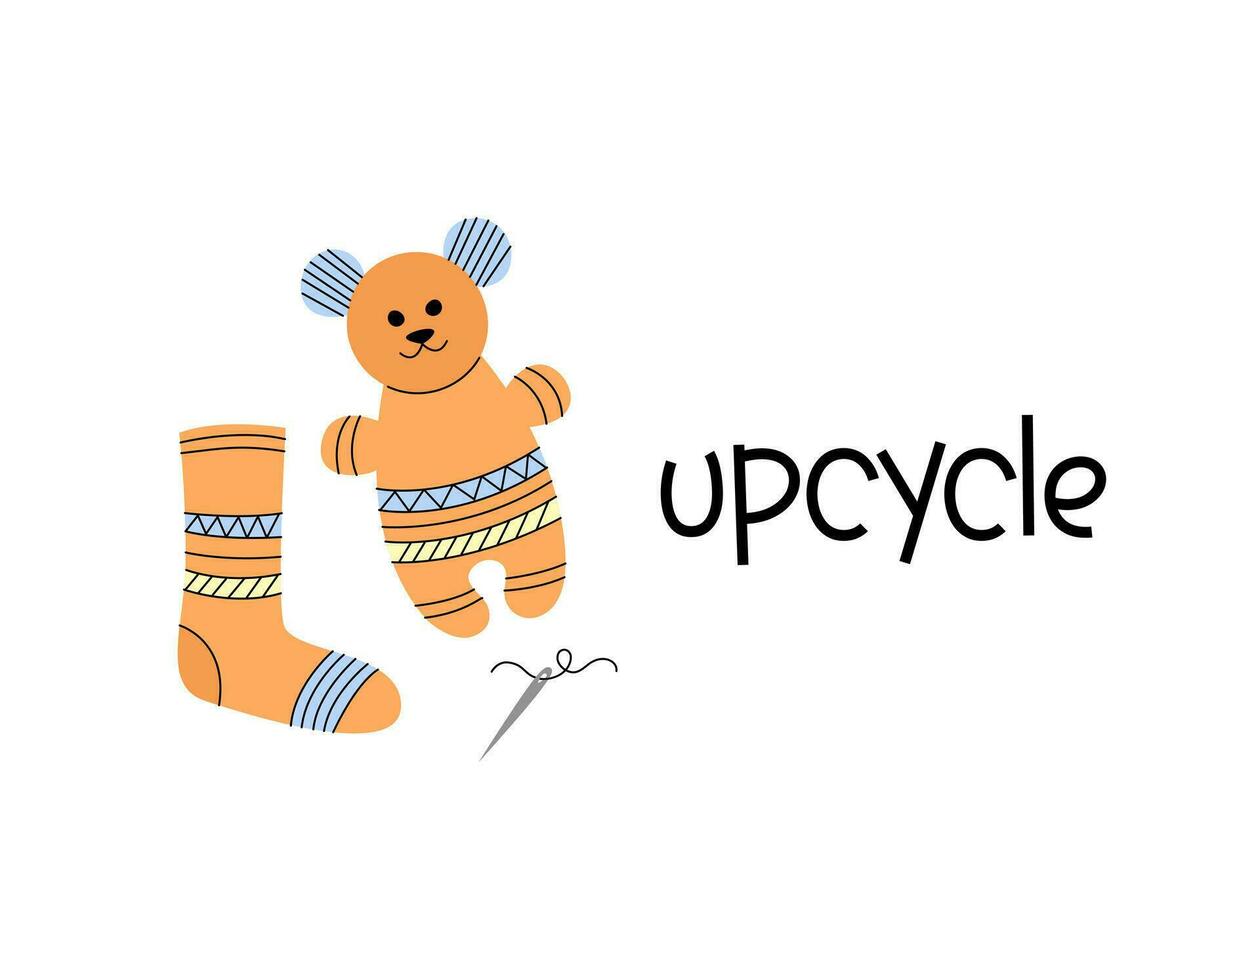 Teddy Bär genäht von Socke. handgemacht Spielzeug. Upcycling Konzept Vektor Illustration. nachhaltig Leben.